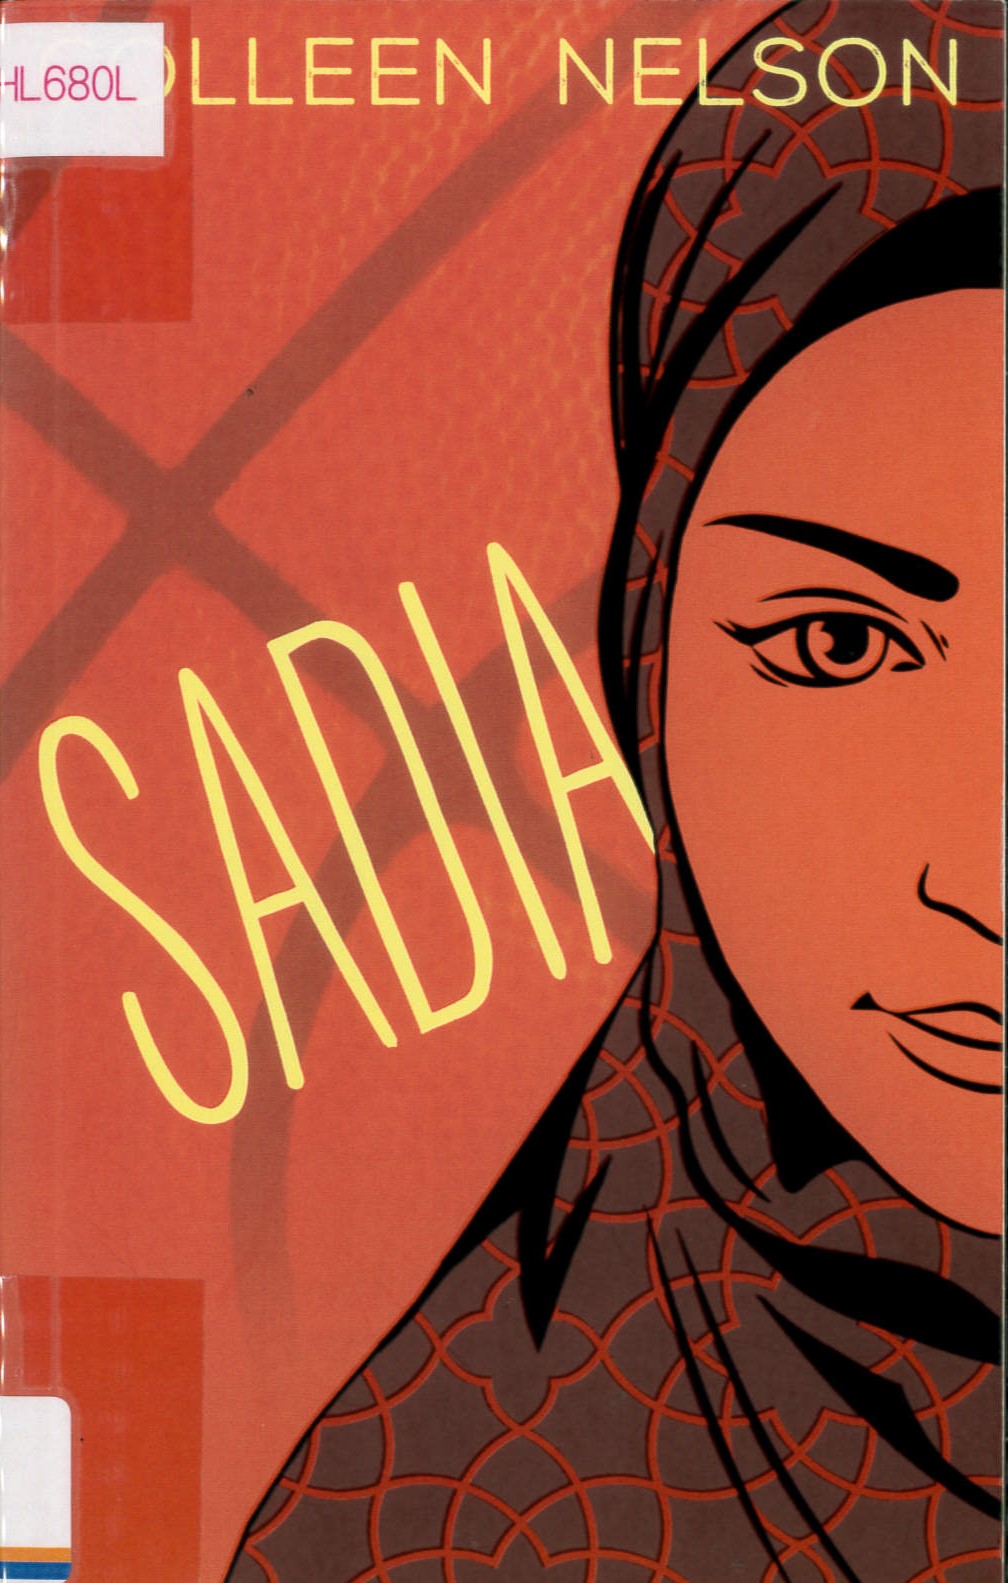 Sadia /